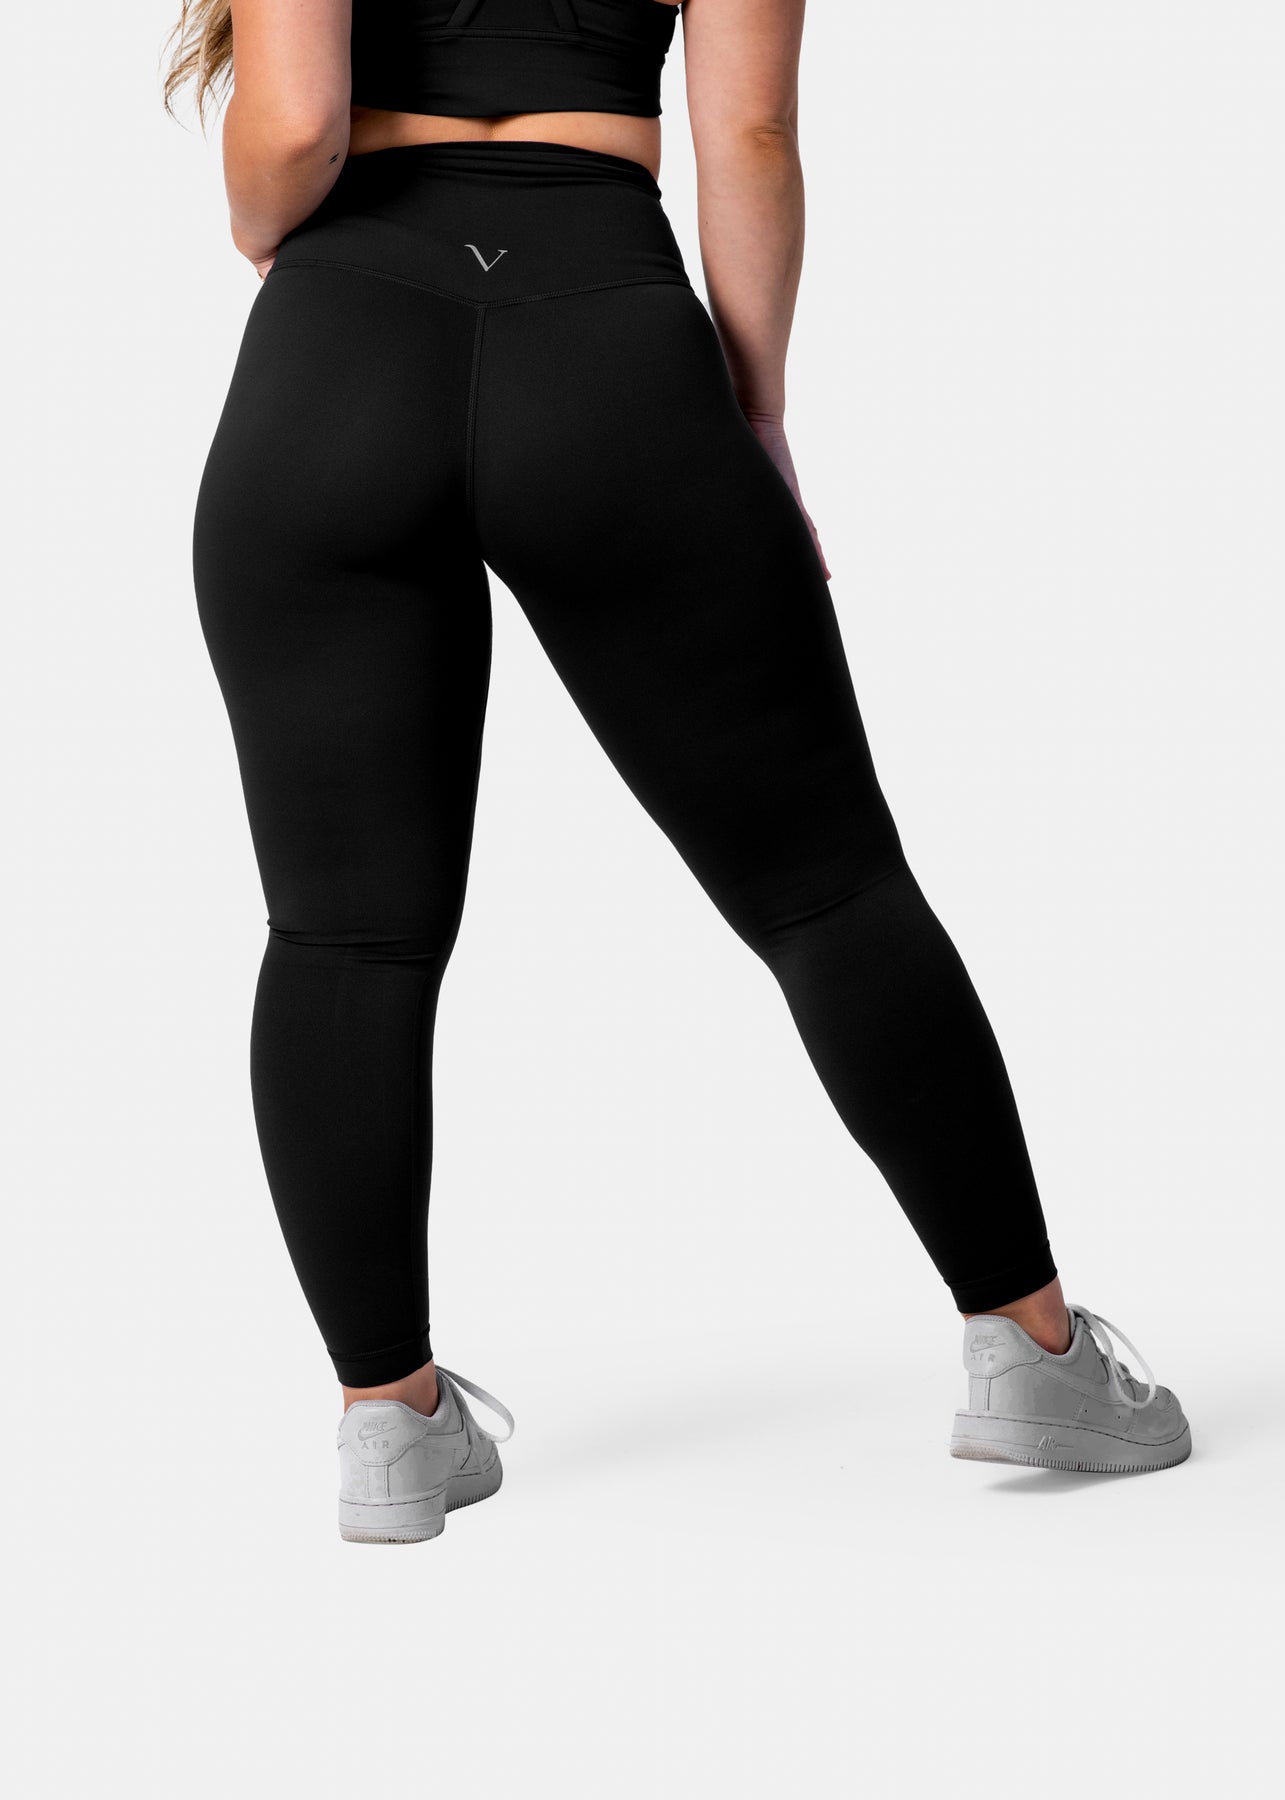 Women's Irada Shiny Shimmer Spandex Leggings Compression Pants Small New  Black